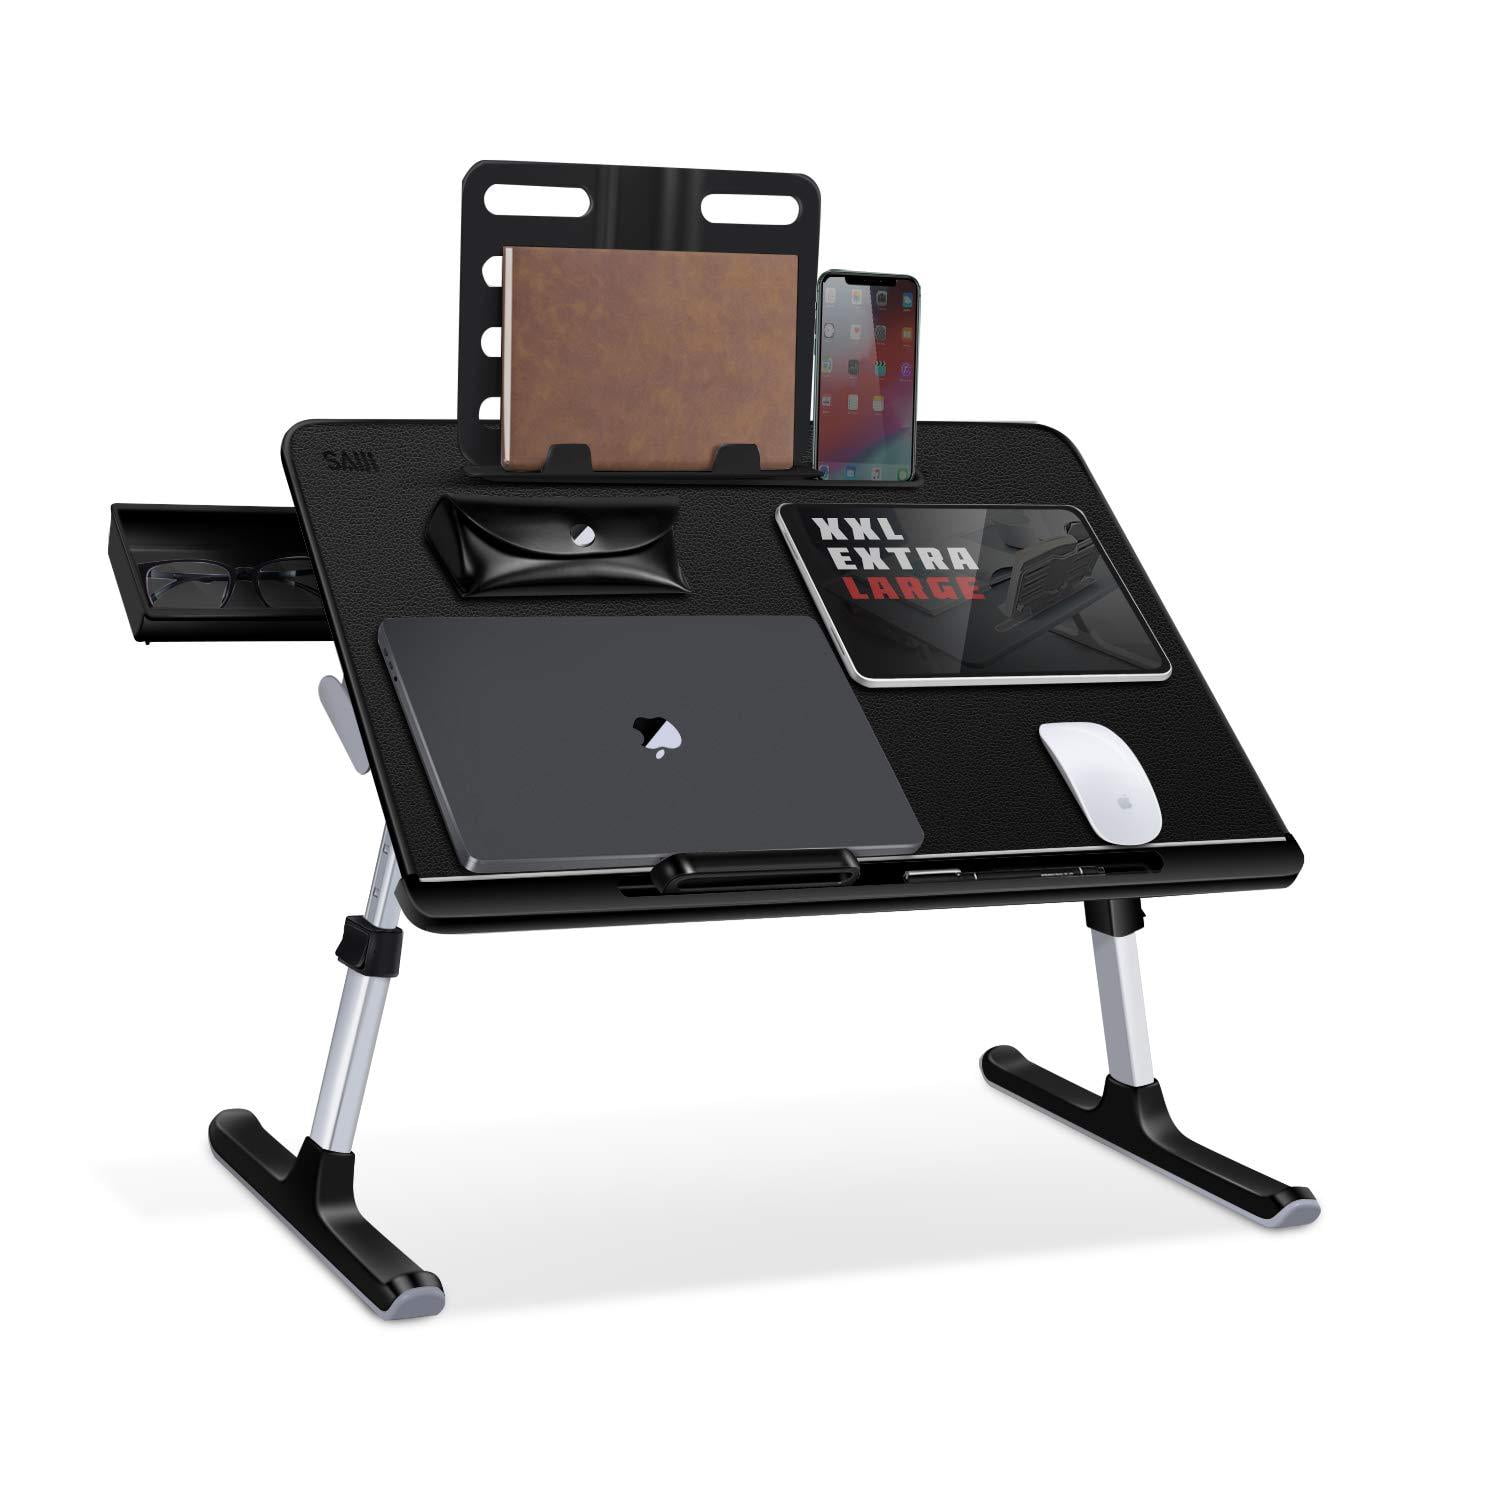 Laptop Bed Tray Table, SAIJI Adjustable Laptop Desk for